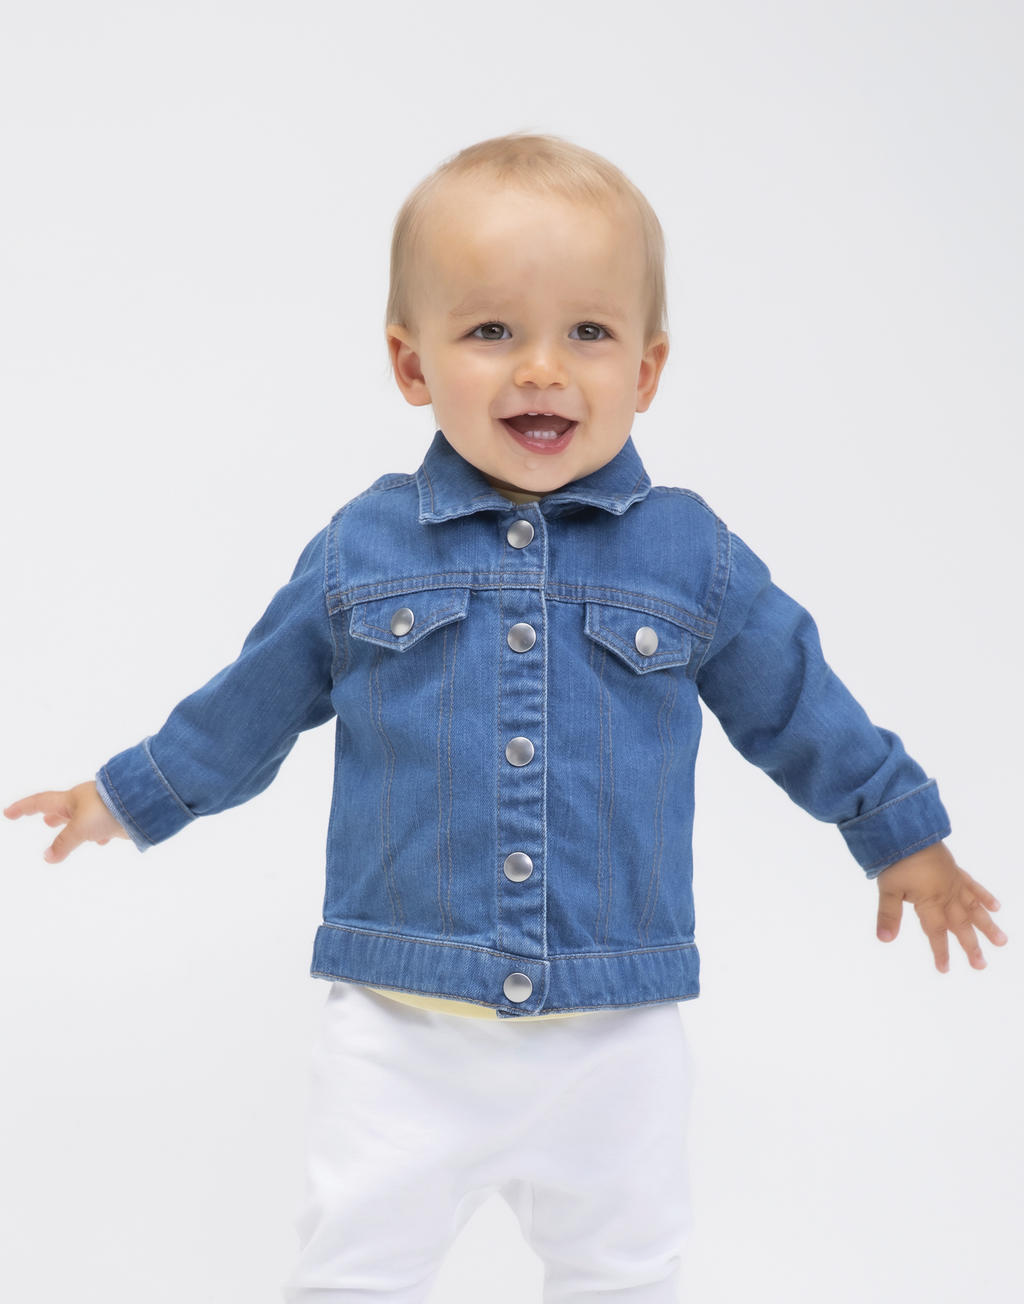  Baby Rocks Denim Jacket in Farbe Denim Blue